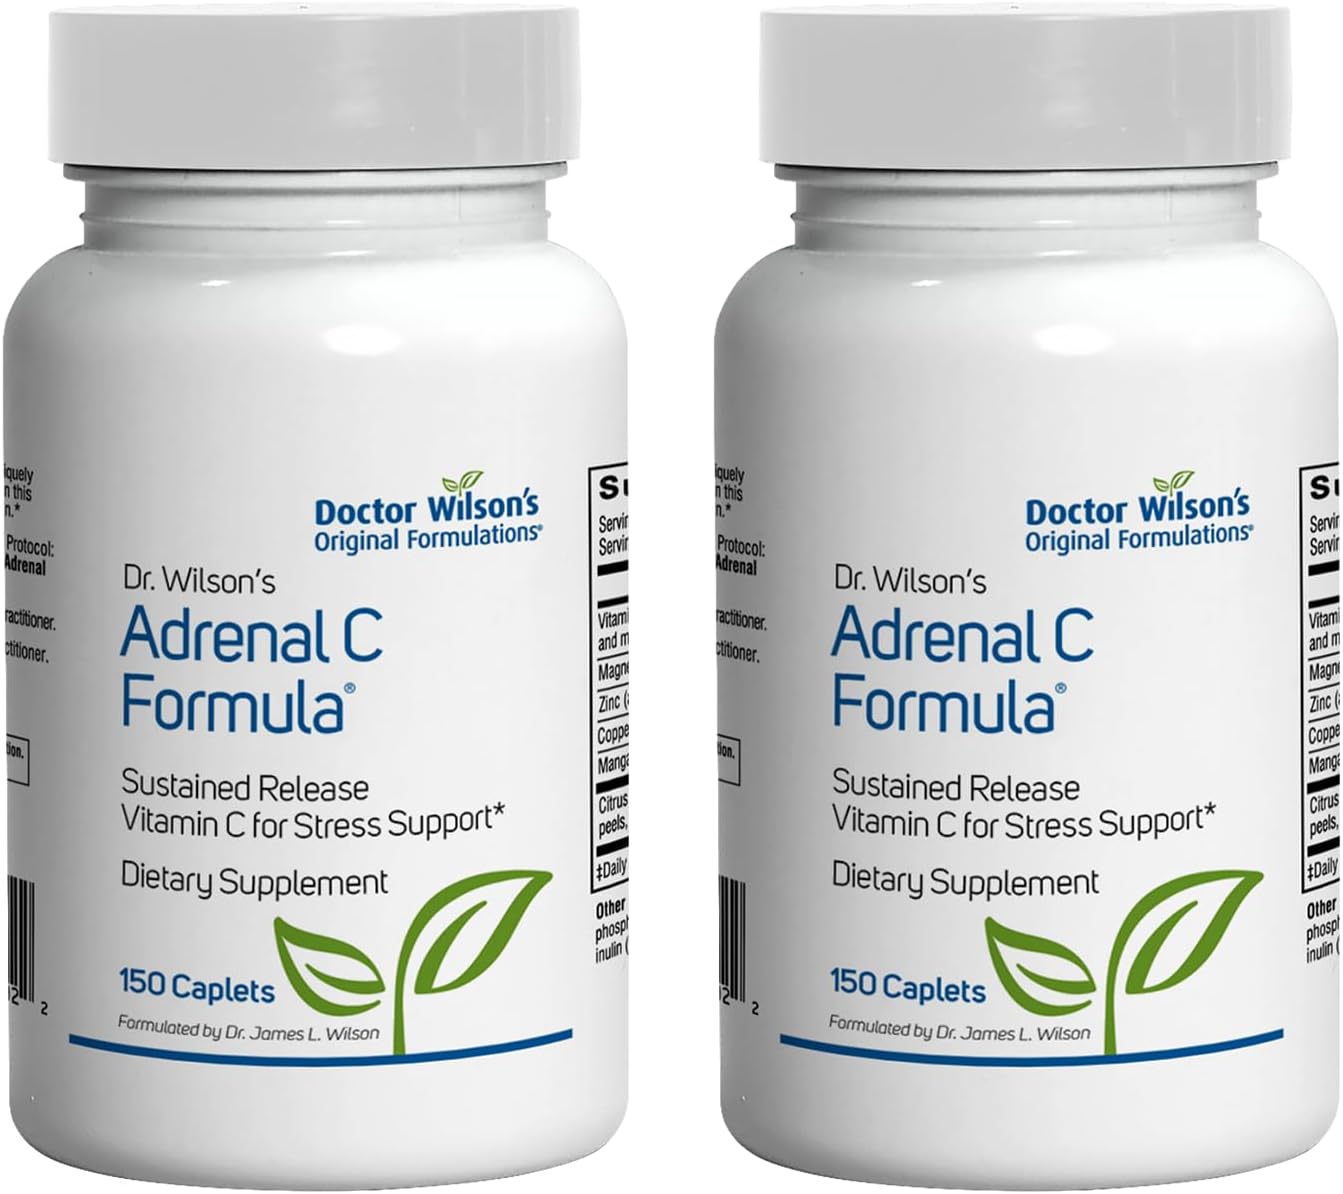 2-Pack Doctor Wilson's Original Formulations Adrenal C Formu